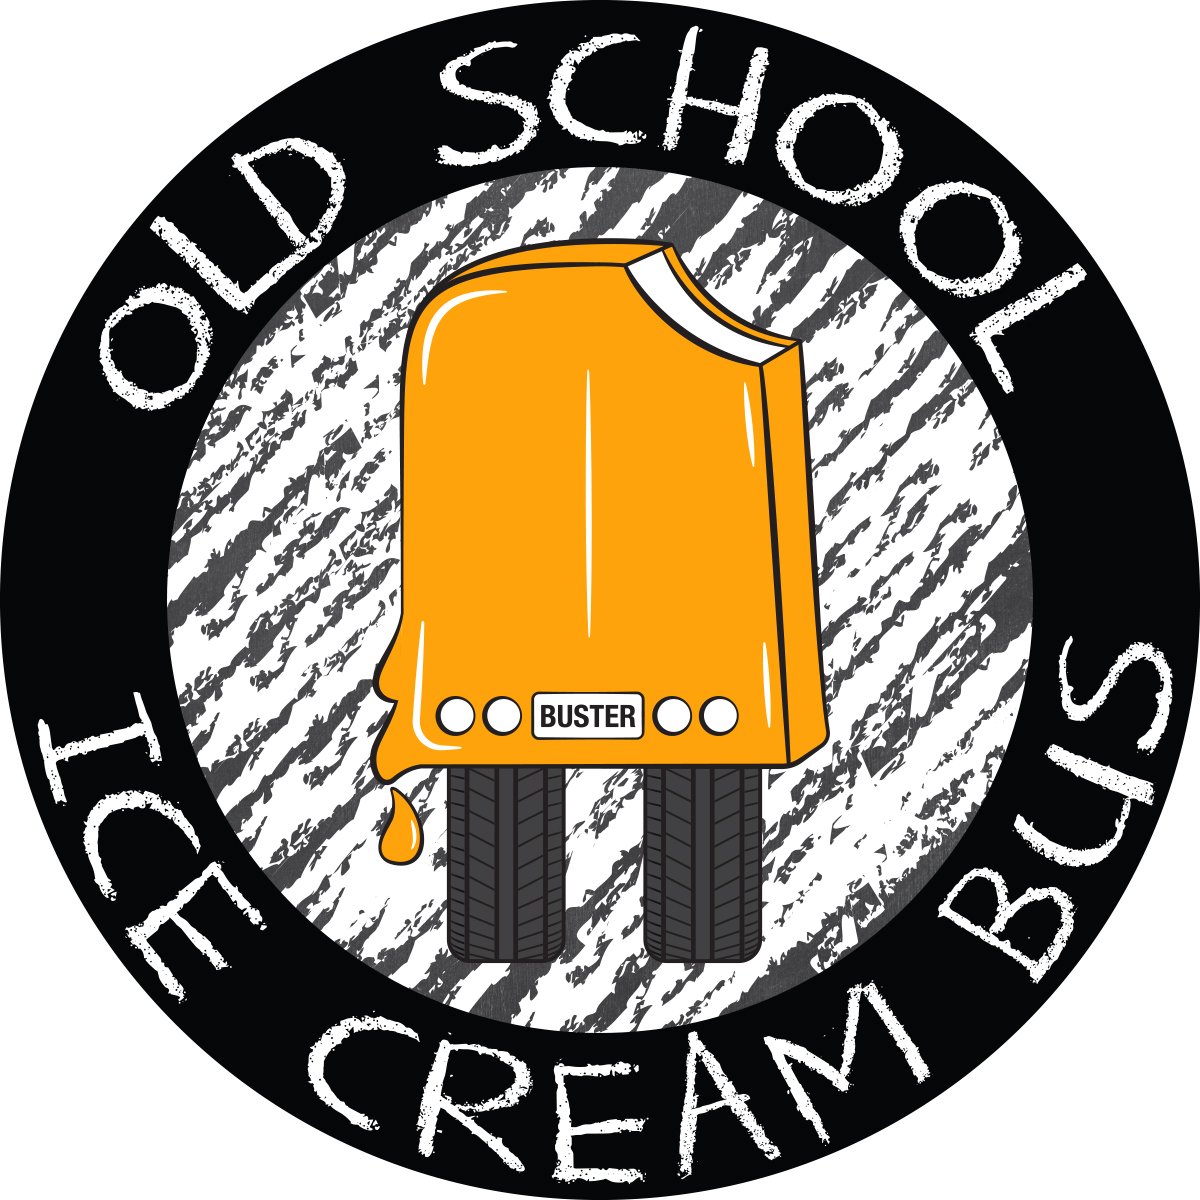 Old School Ice Cream Bus